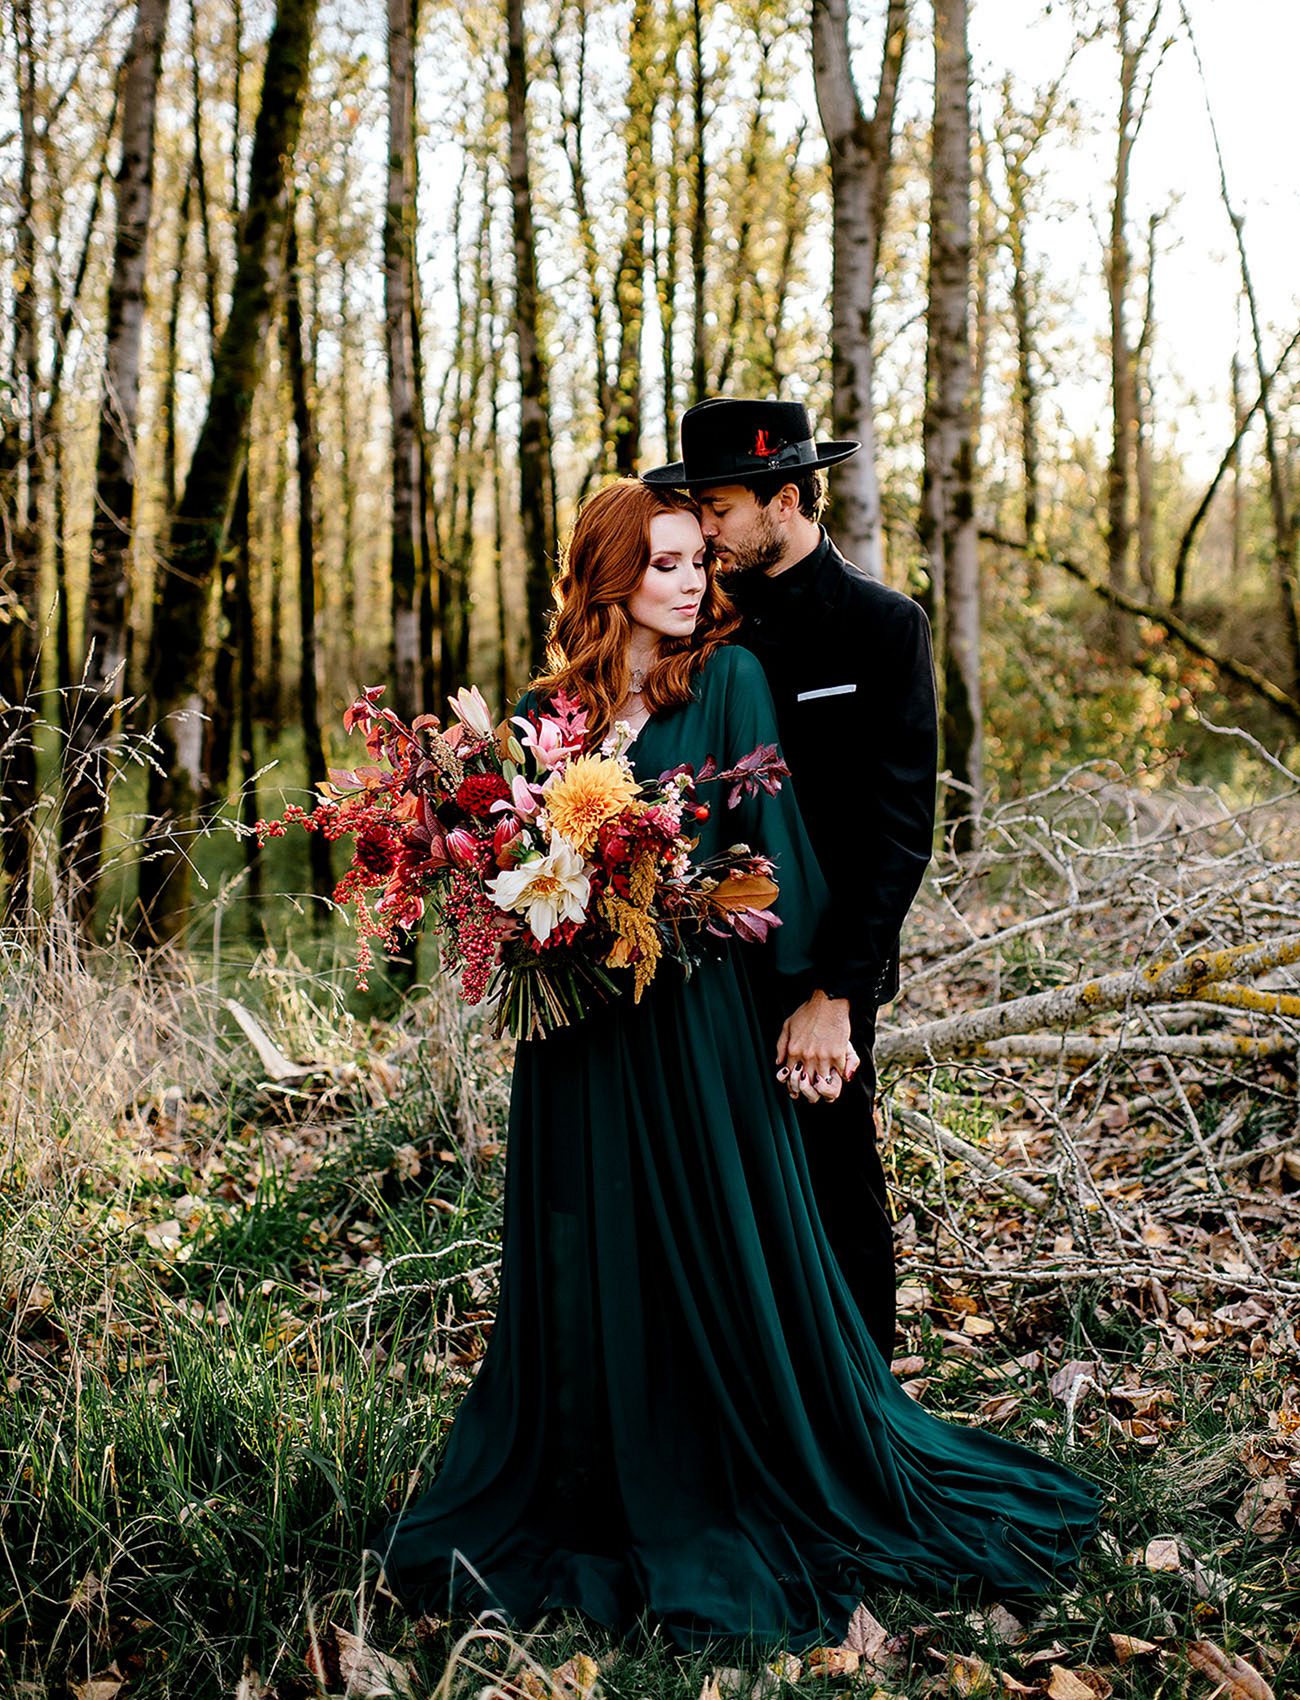 Autumn wedding proposal from greenweddingshoes